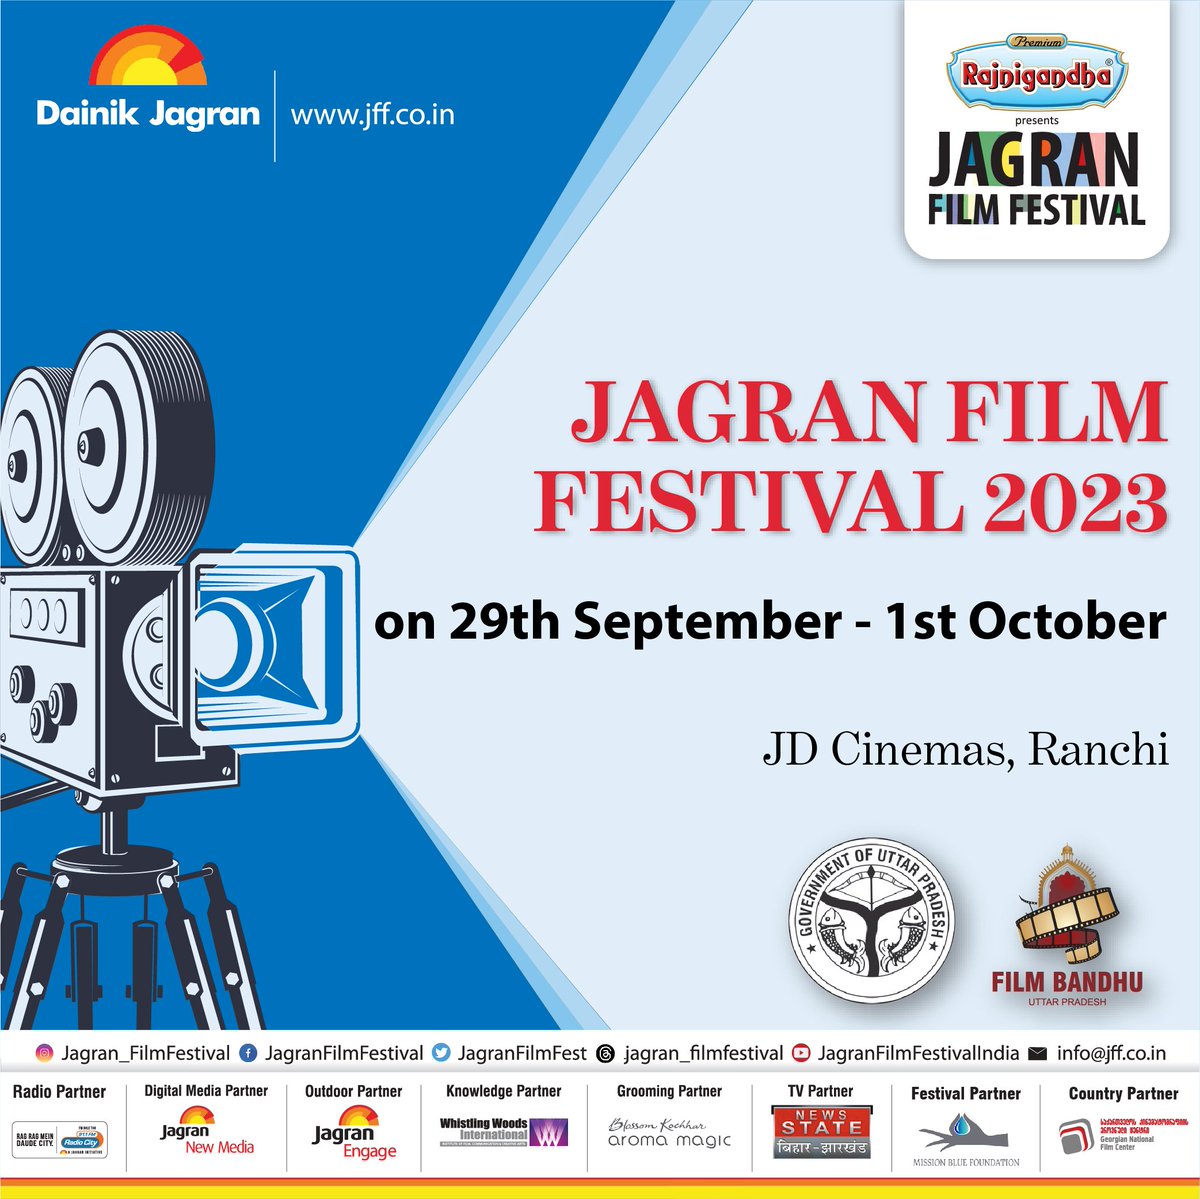 🎬 Ranchi's Reel Delight! Join us at JD Cinemas from Sept 29 - Oct 1 for the Jagran Film Festival 2023. Lights, camera, JFF! 🌟 #JagranFilmFestival #JFF2023 #RanchiRendezvous #JDcinemas #FilmFever #CinephileChronicles #MovieMagic #JFFMumbai